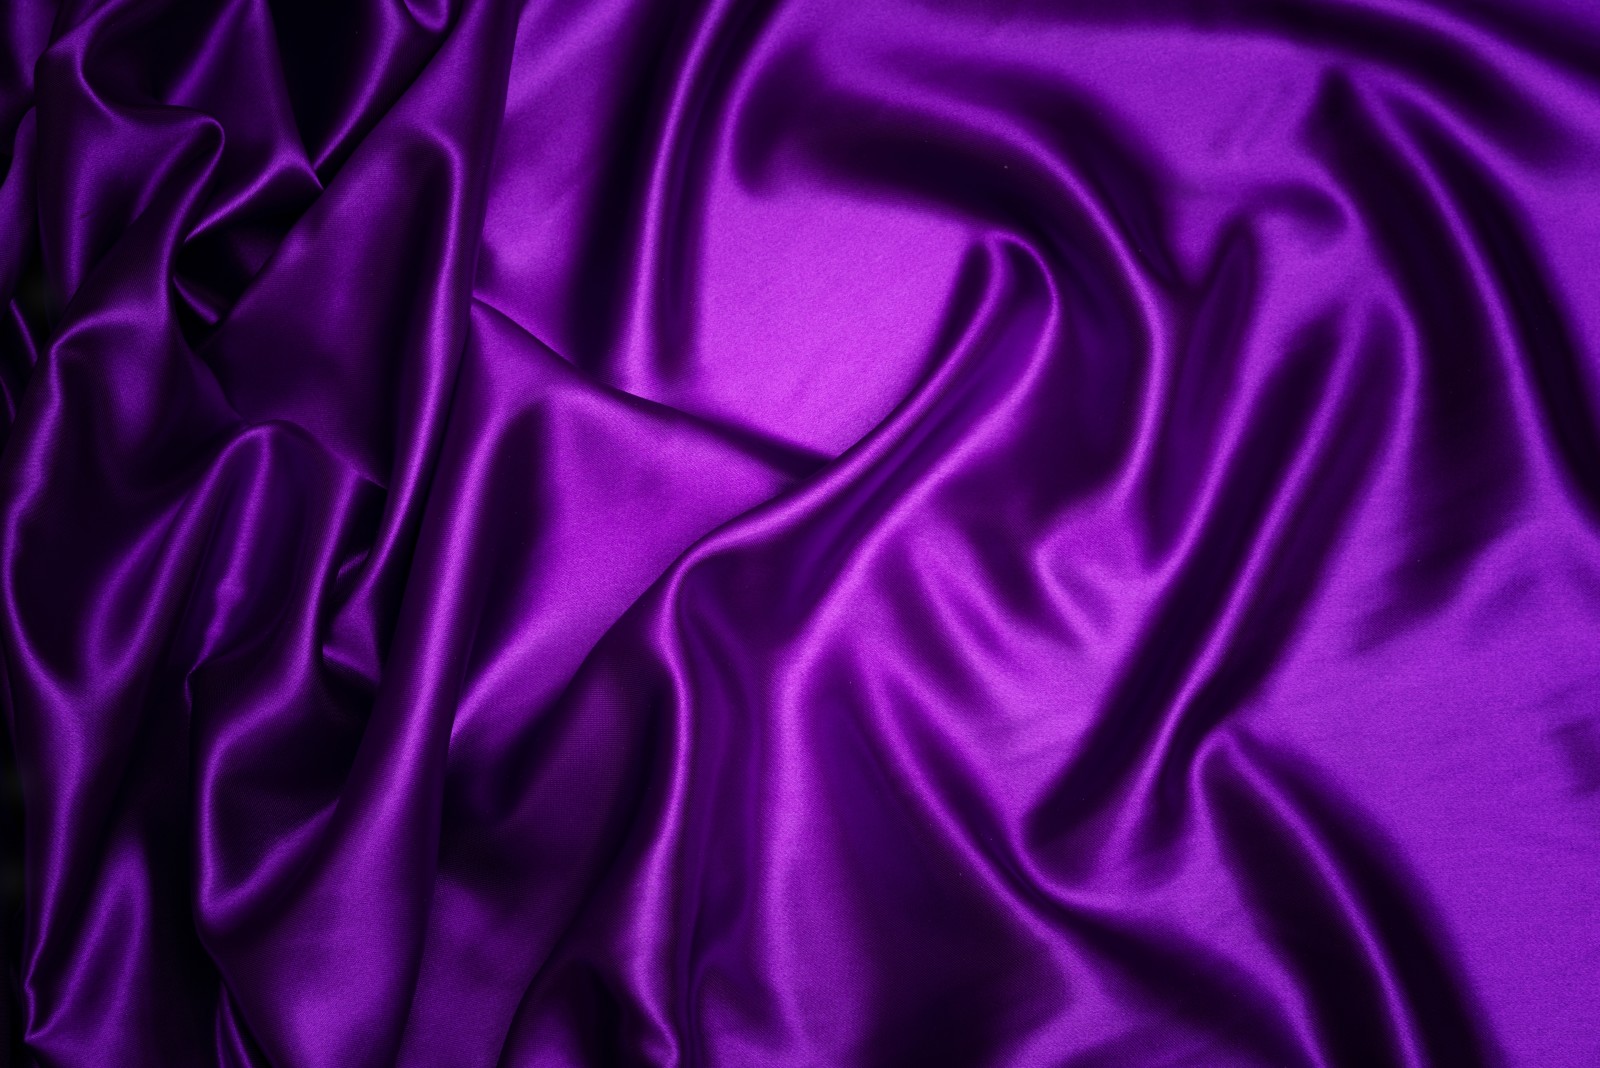 Latar Belakang, tekstur, kain, ungu, sutra, lipatan